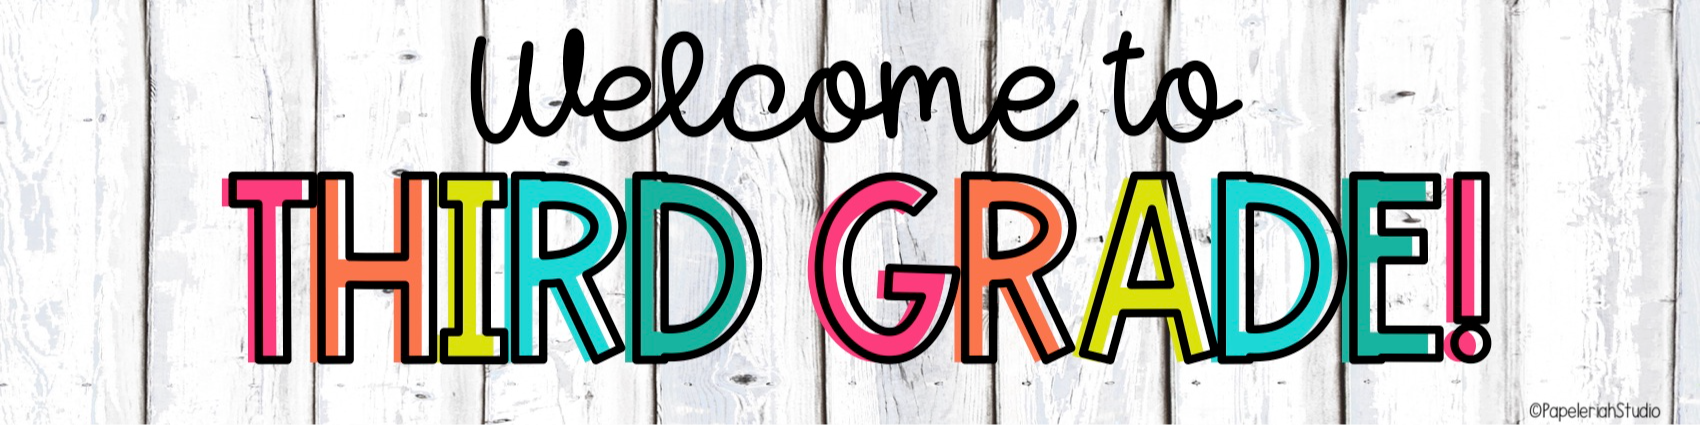 Welcome to 3rd Grade . Amanda-Ann Benairis, Rosemont Elementary Schools 